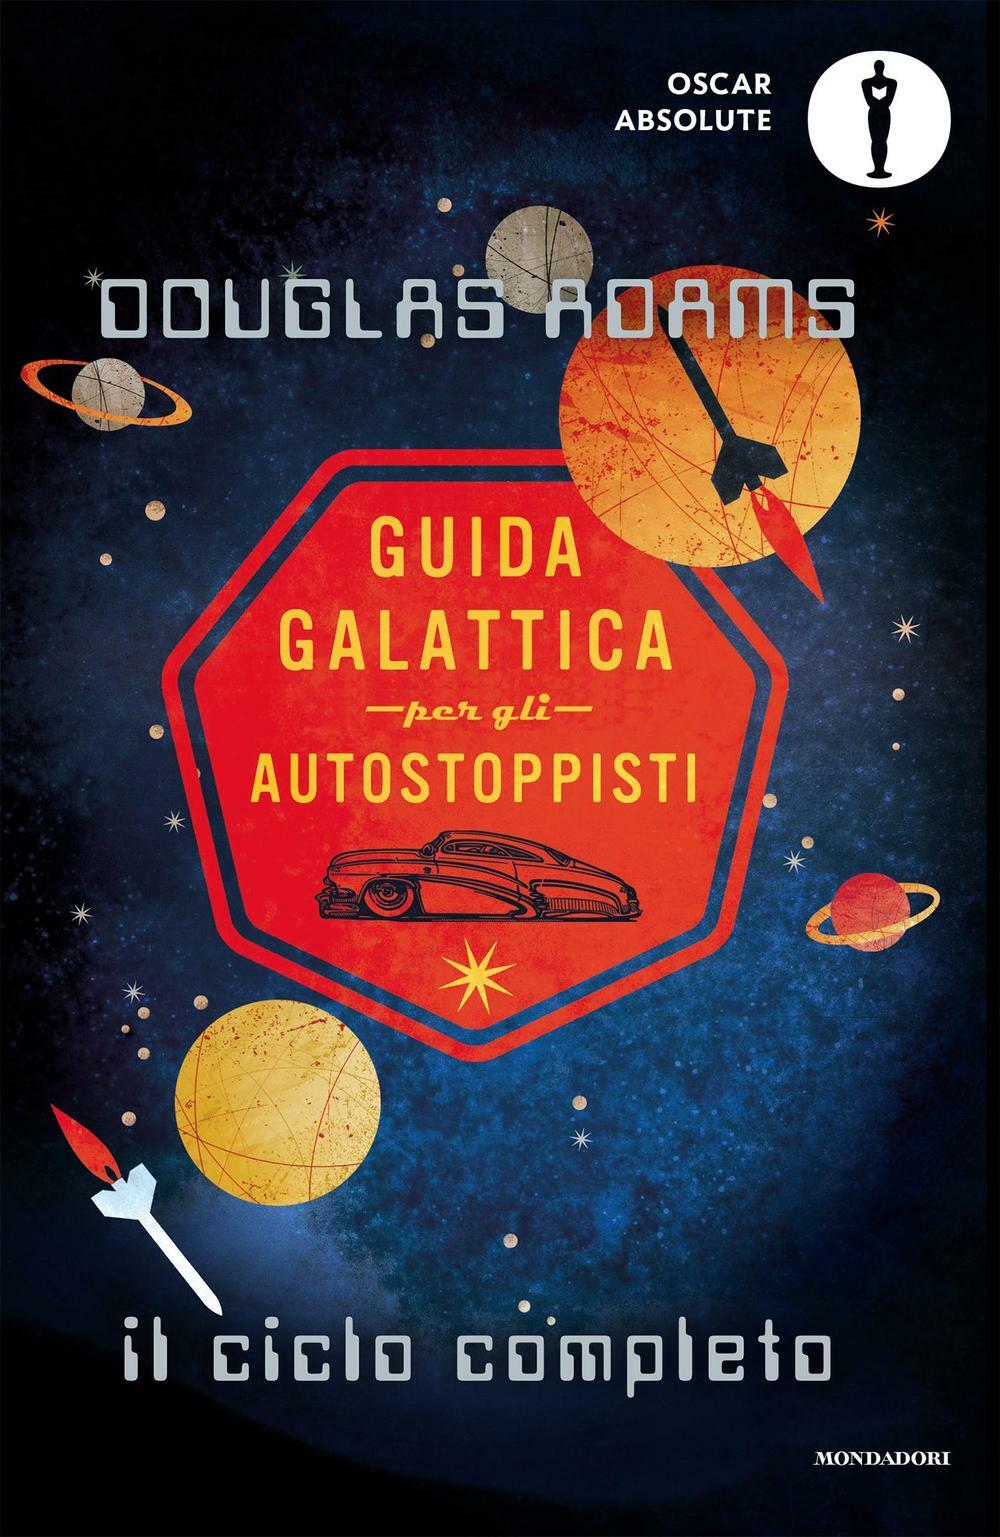 Guida galattica per gli autostoppisti (Italian language, 1999, Oscar Mondadori)